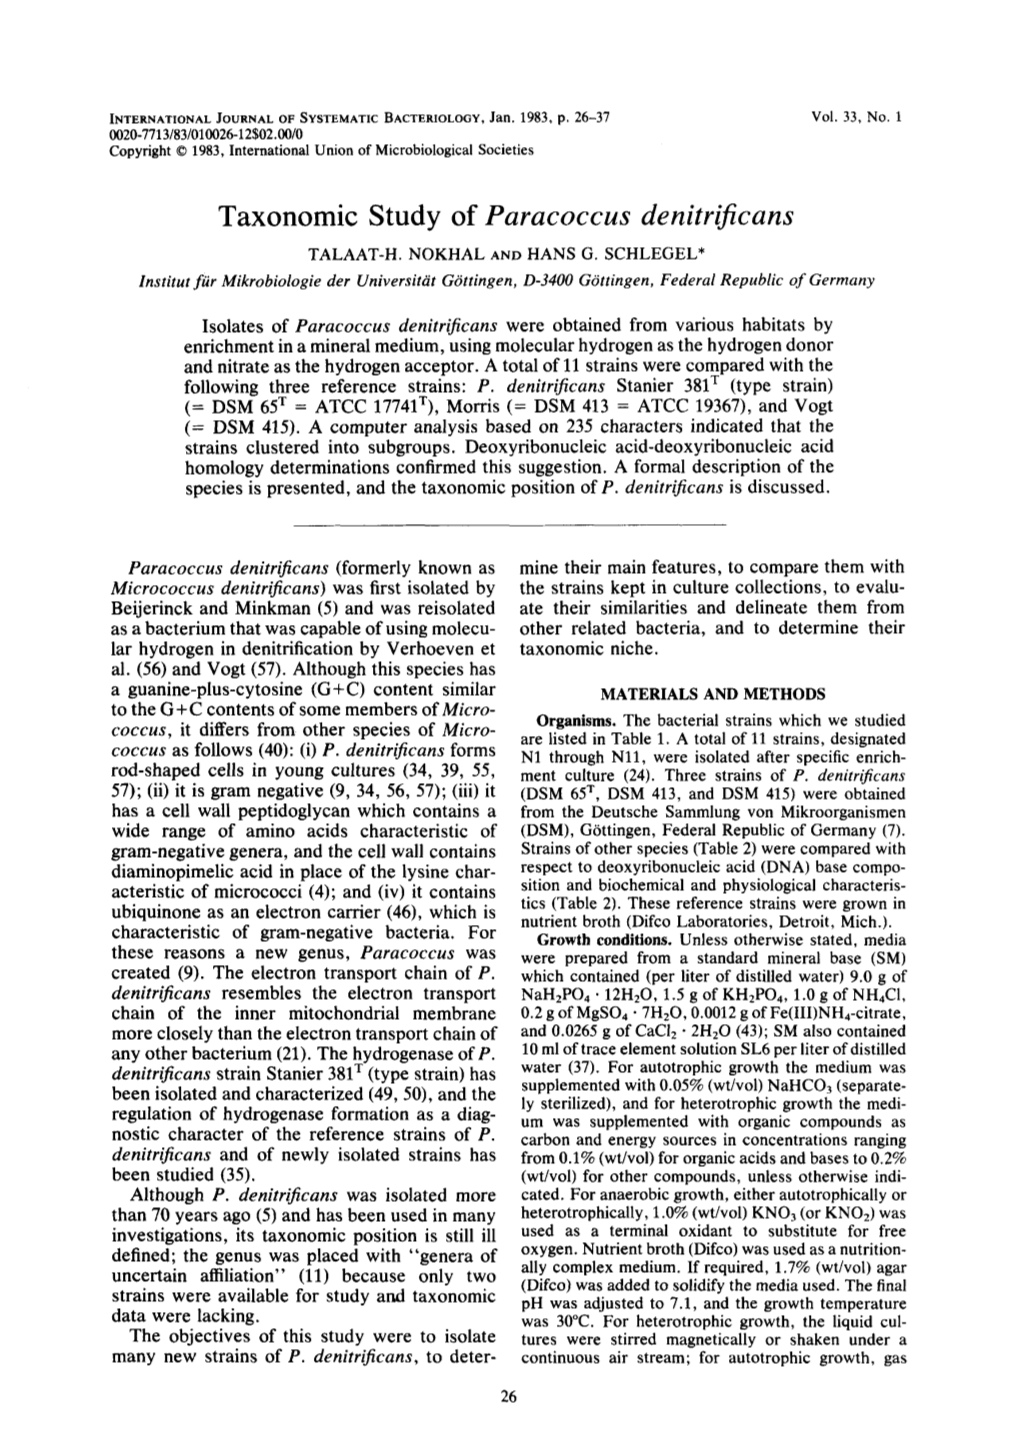 Taxonomic Study of Paracoccus Denitrijicans